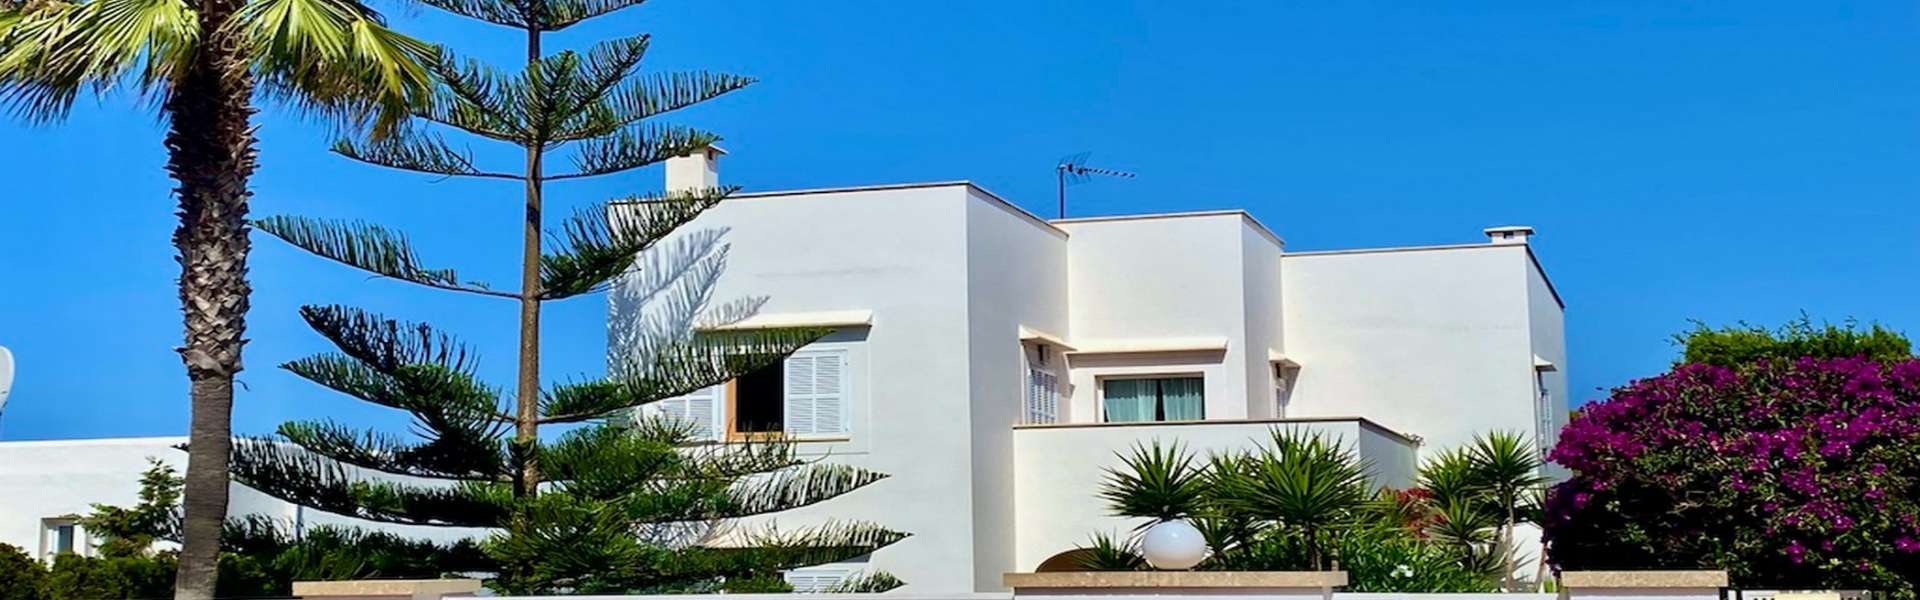 Exclusive villa with vacation rental license in Cala d'Or/Punta des Port 